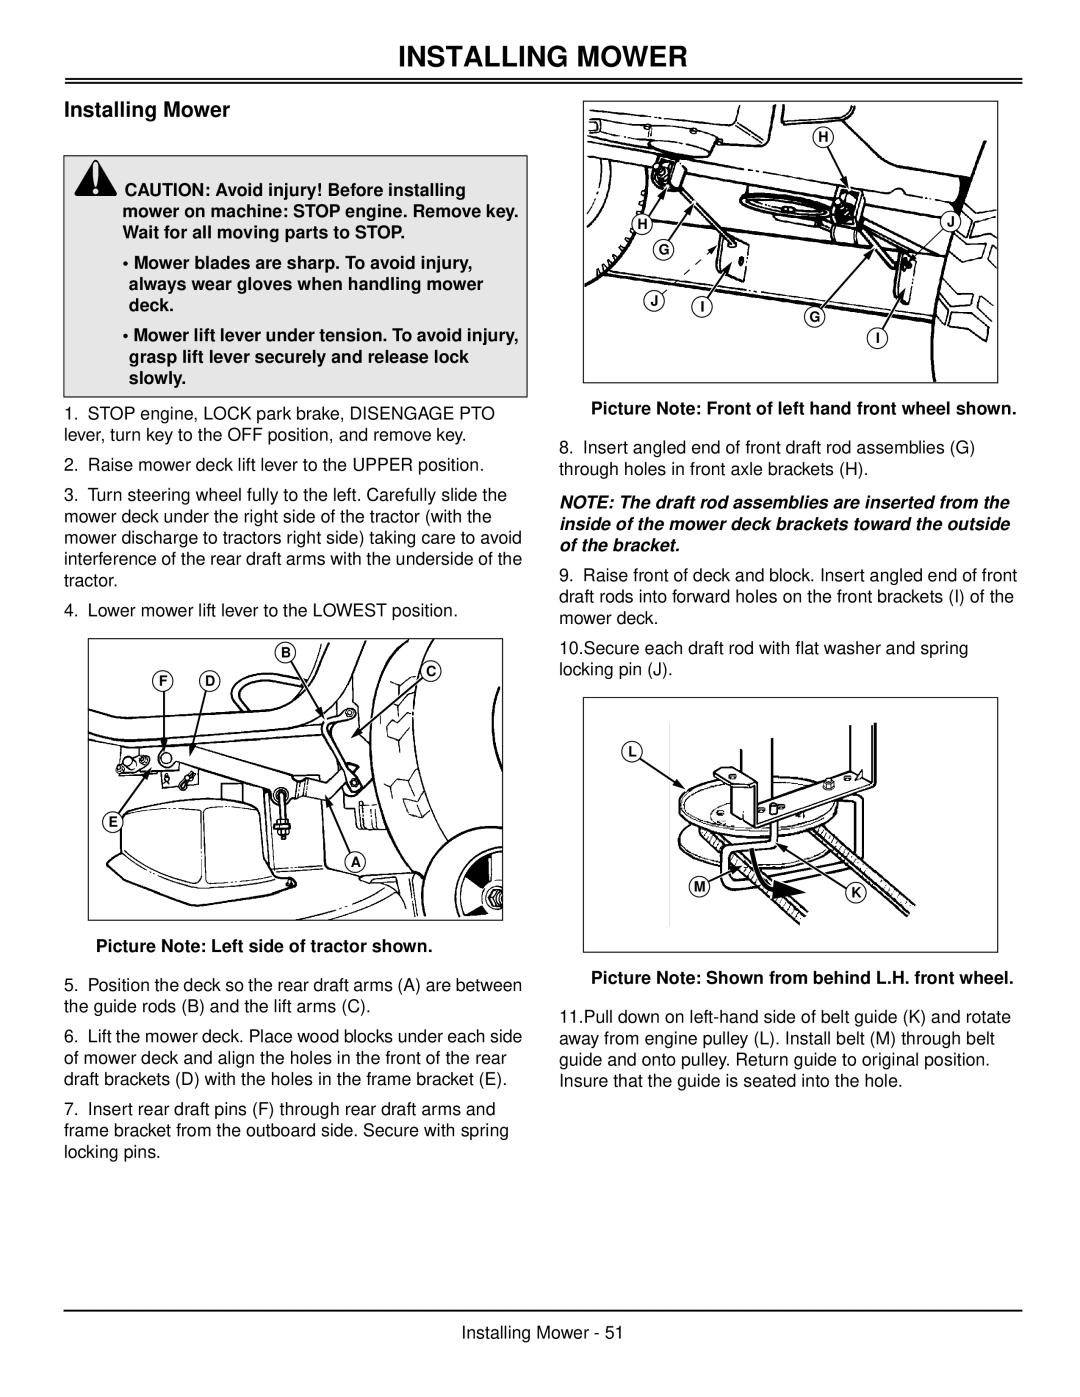 Scotts S1642, S1742, S2046 manual Installing Mower 